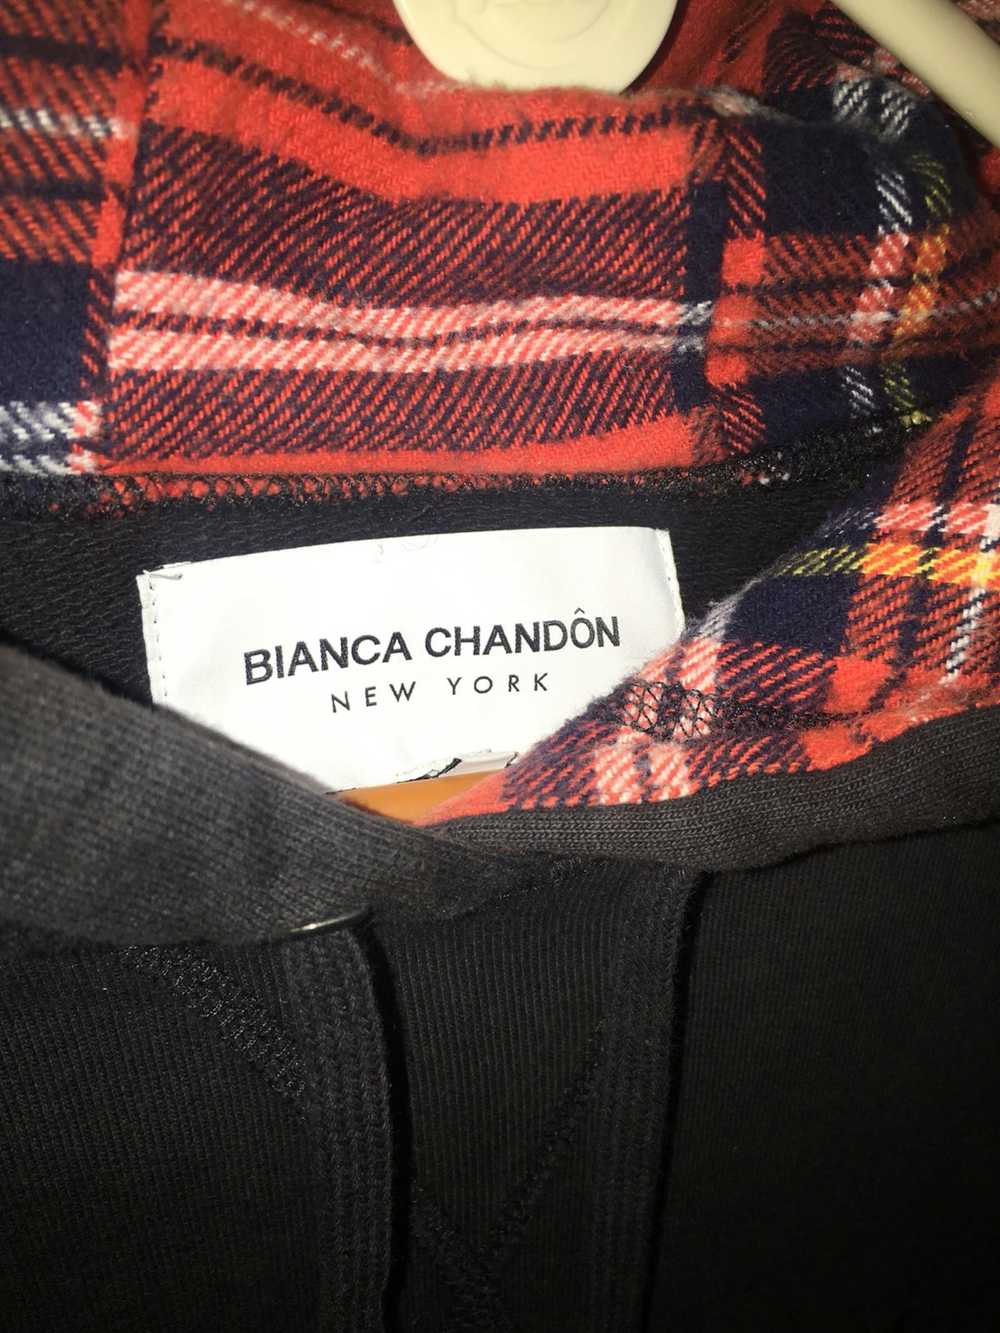 Bianca Chandon Bianca chandon - image 2